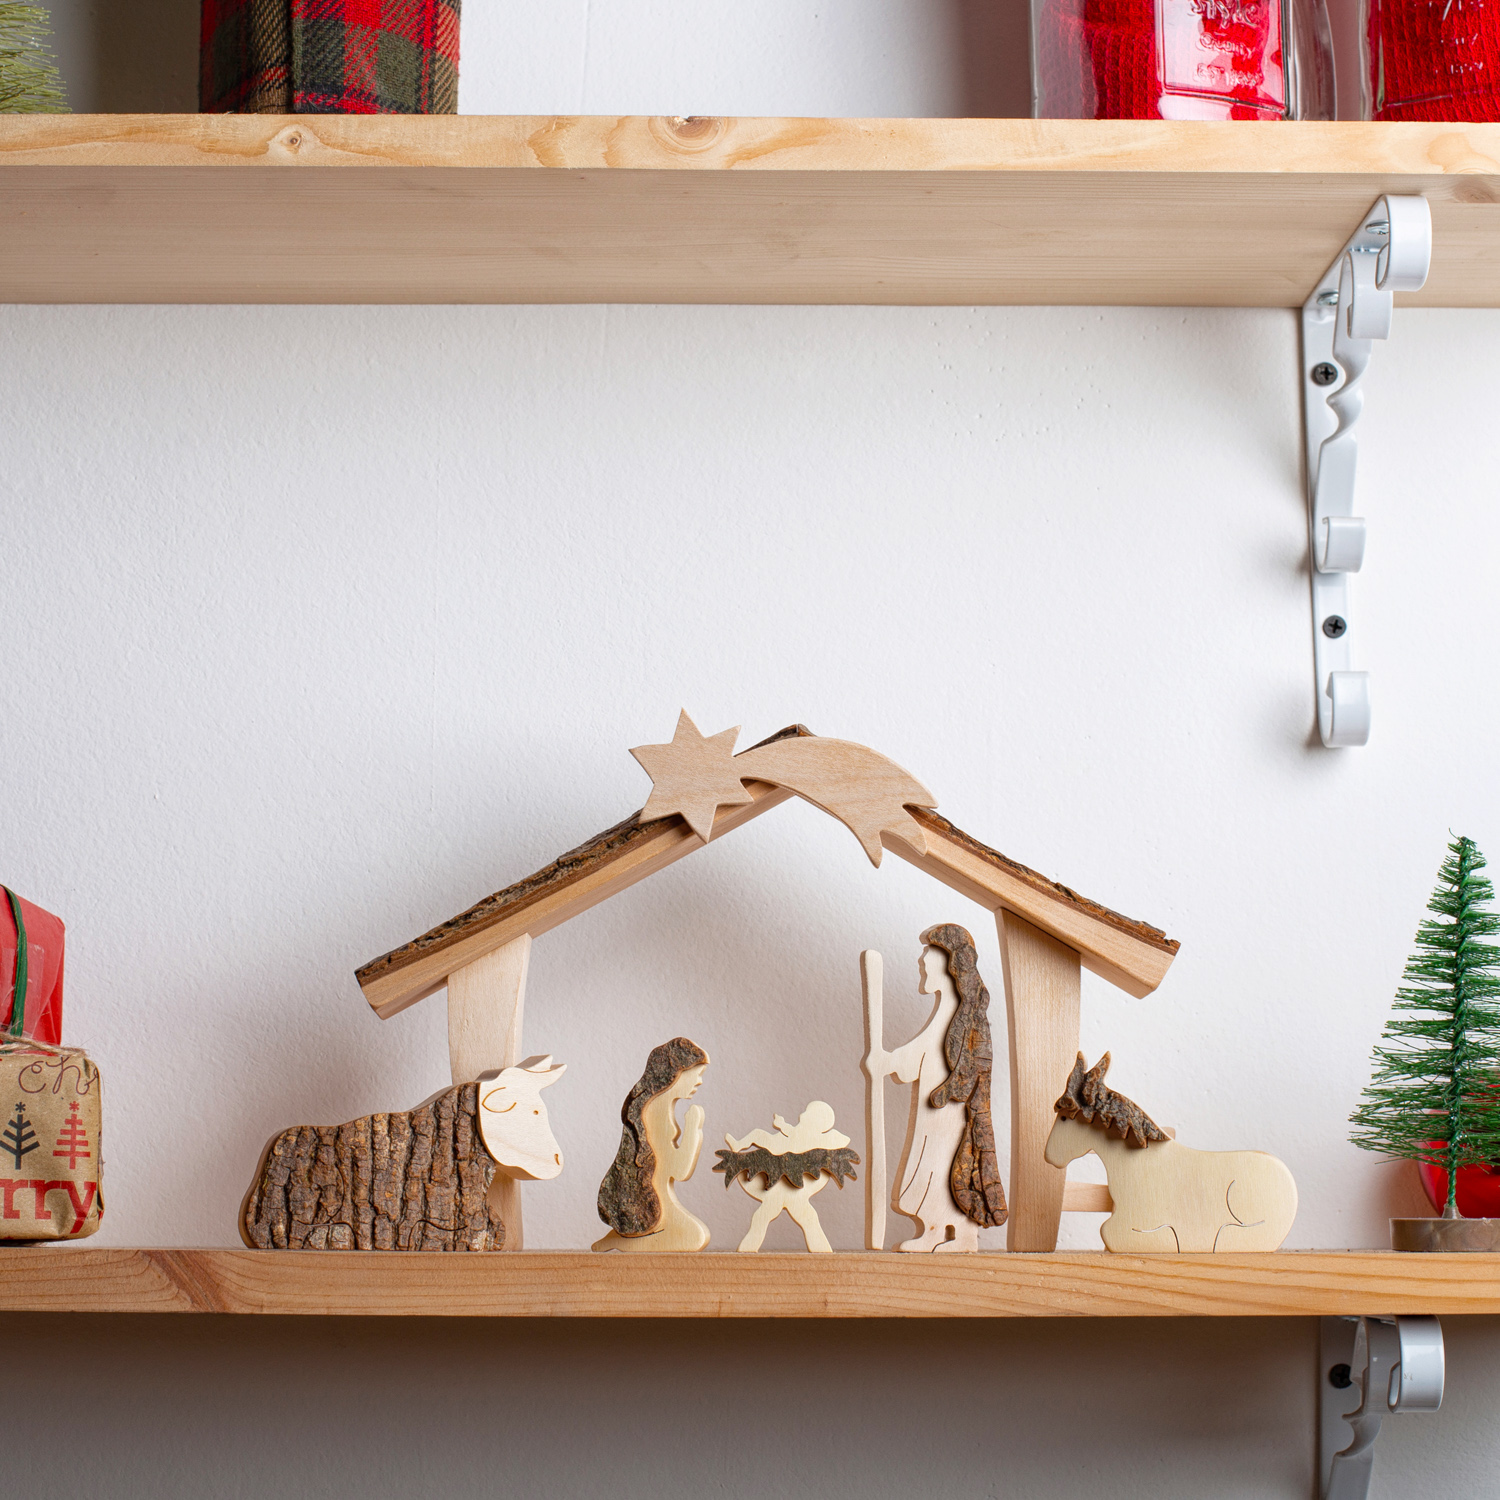 Wooden Nativity Scenes